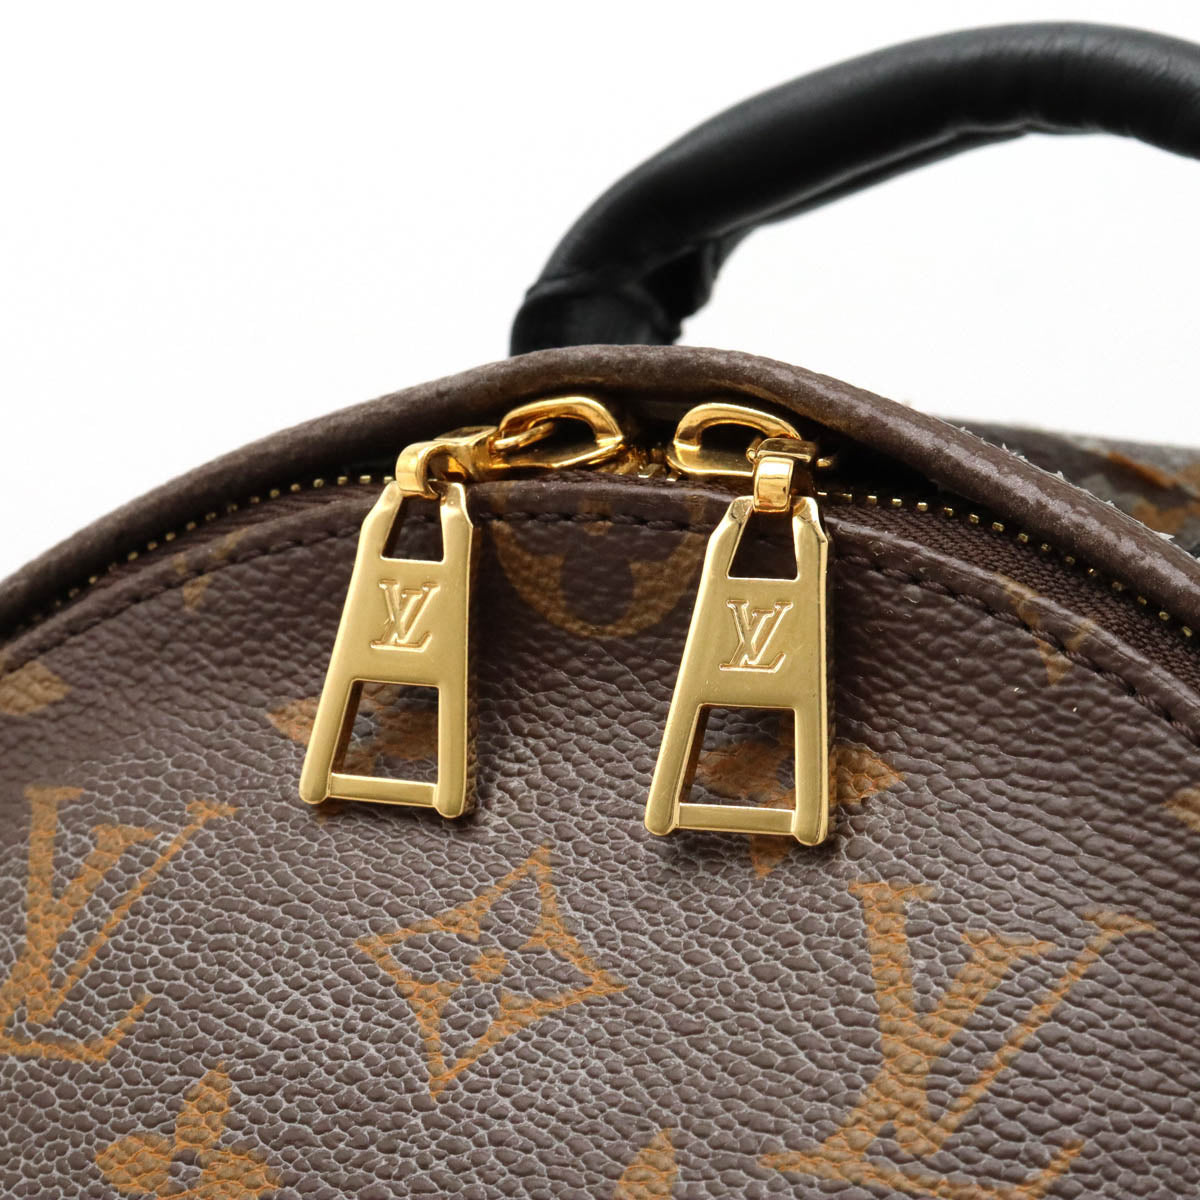 Louis Vuitton Monogram 棕櫚泉雙肩包 M41560 by Louis Vuitton